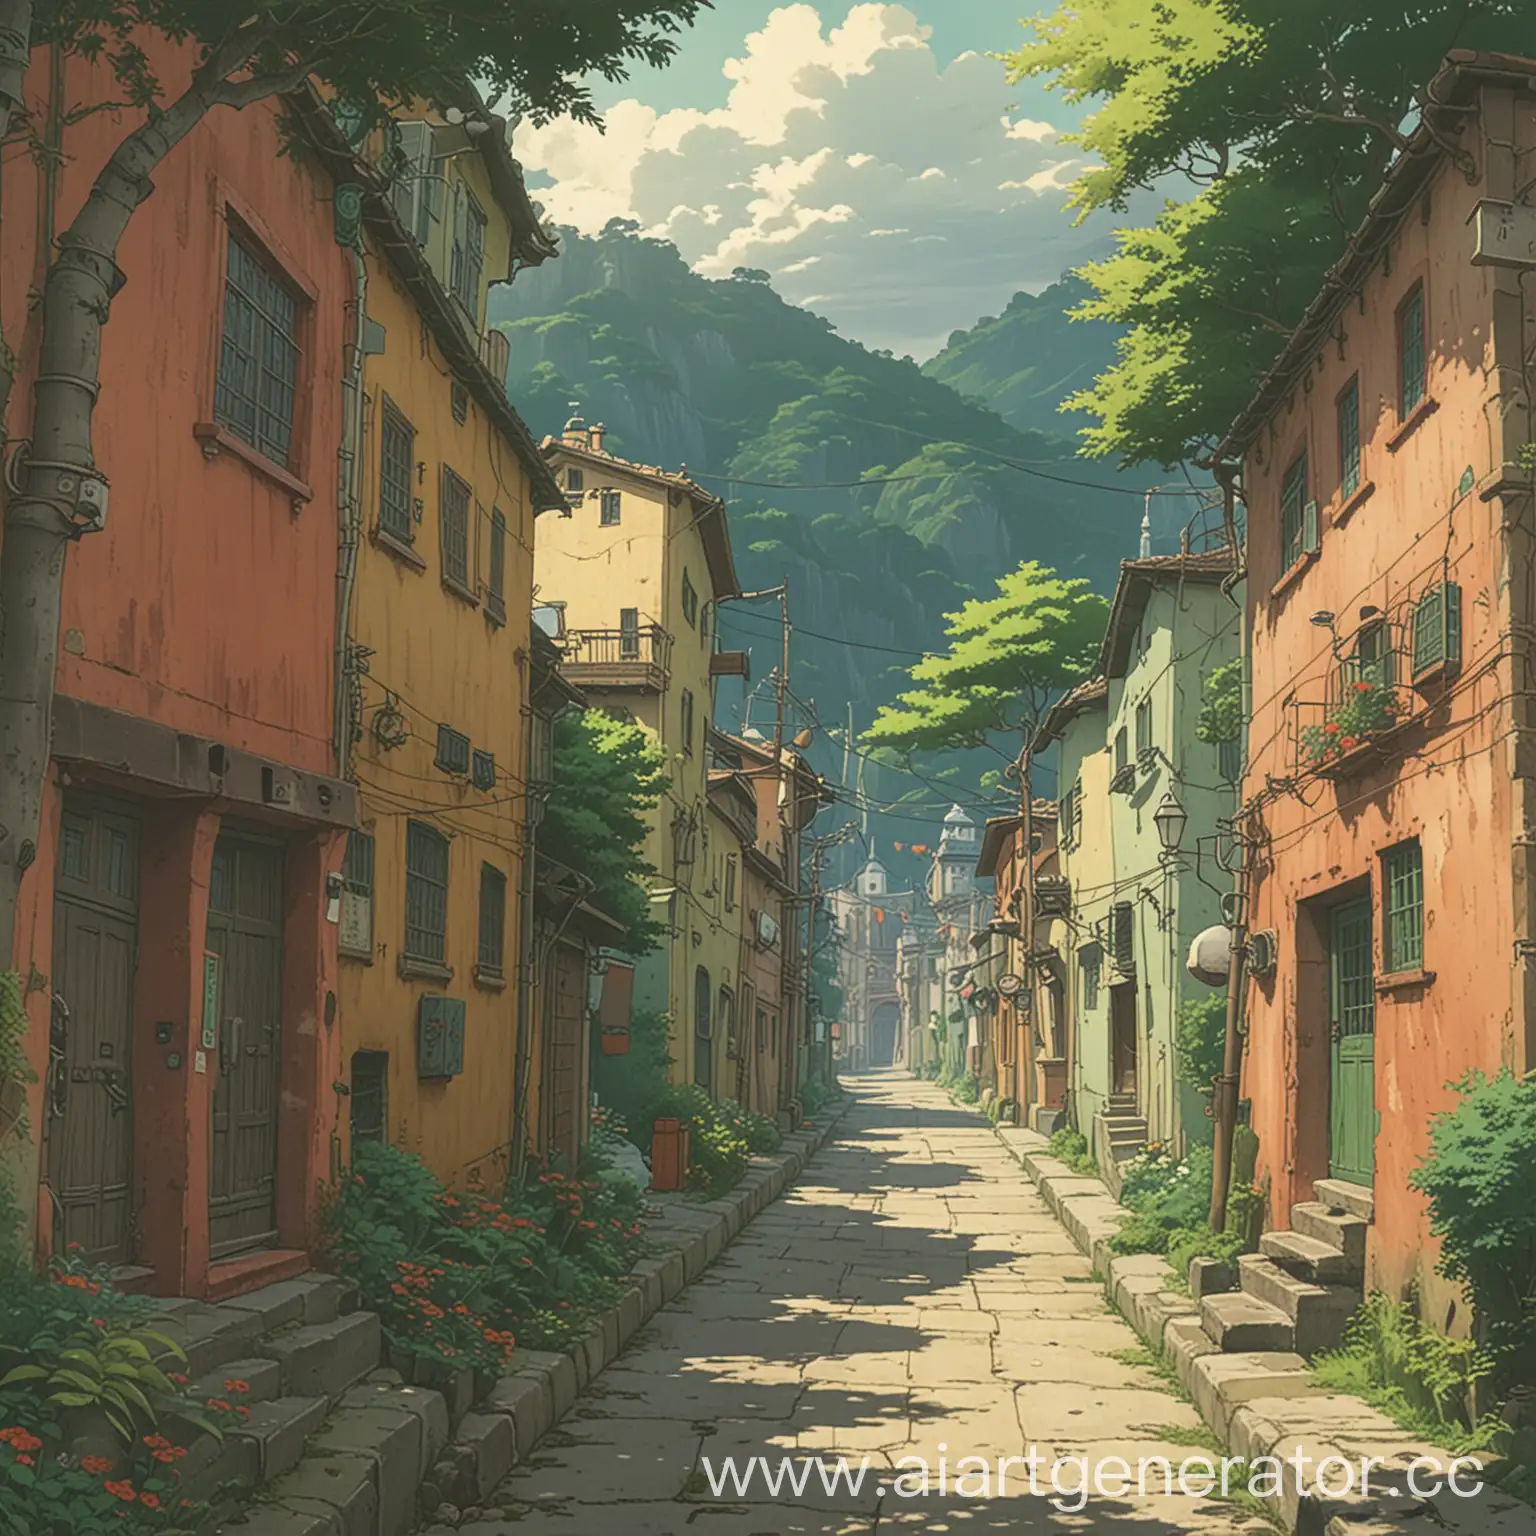 Enchanting-Studio-Ghibli-Inspired-Animated-Film-Background